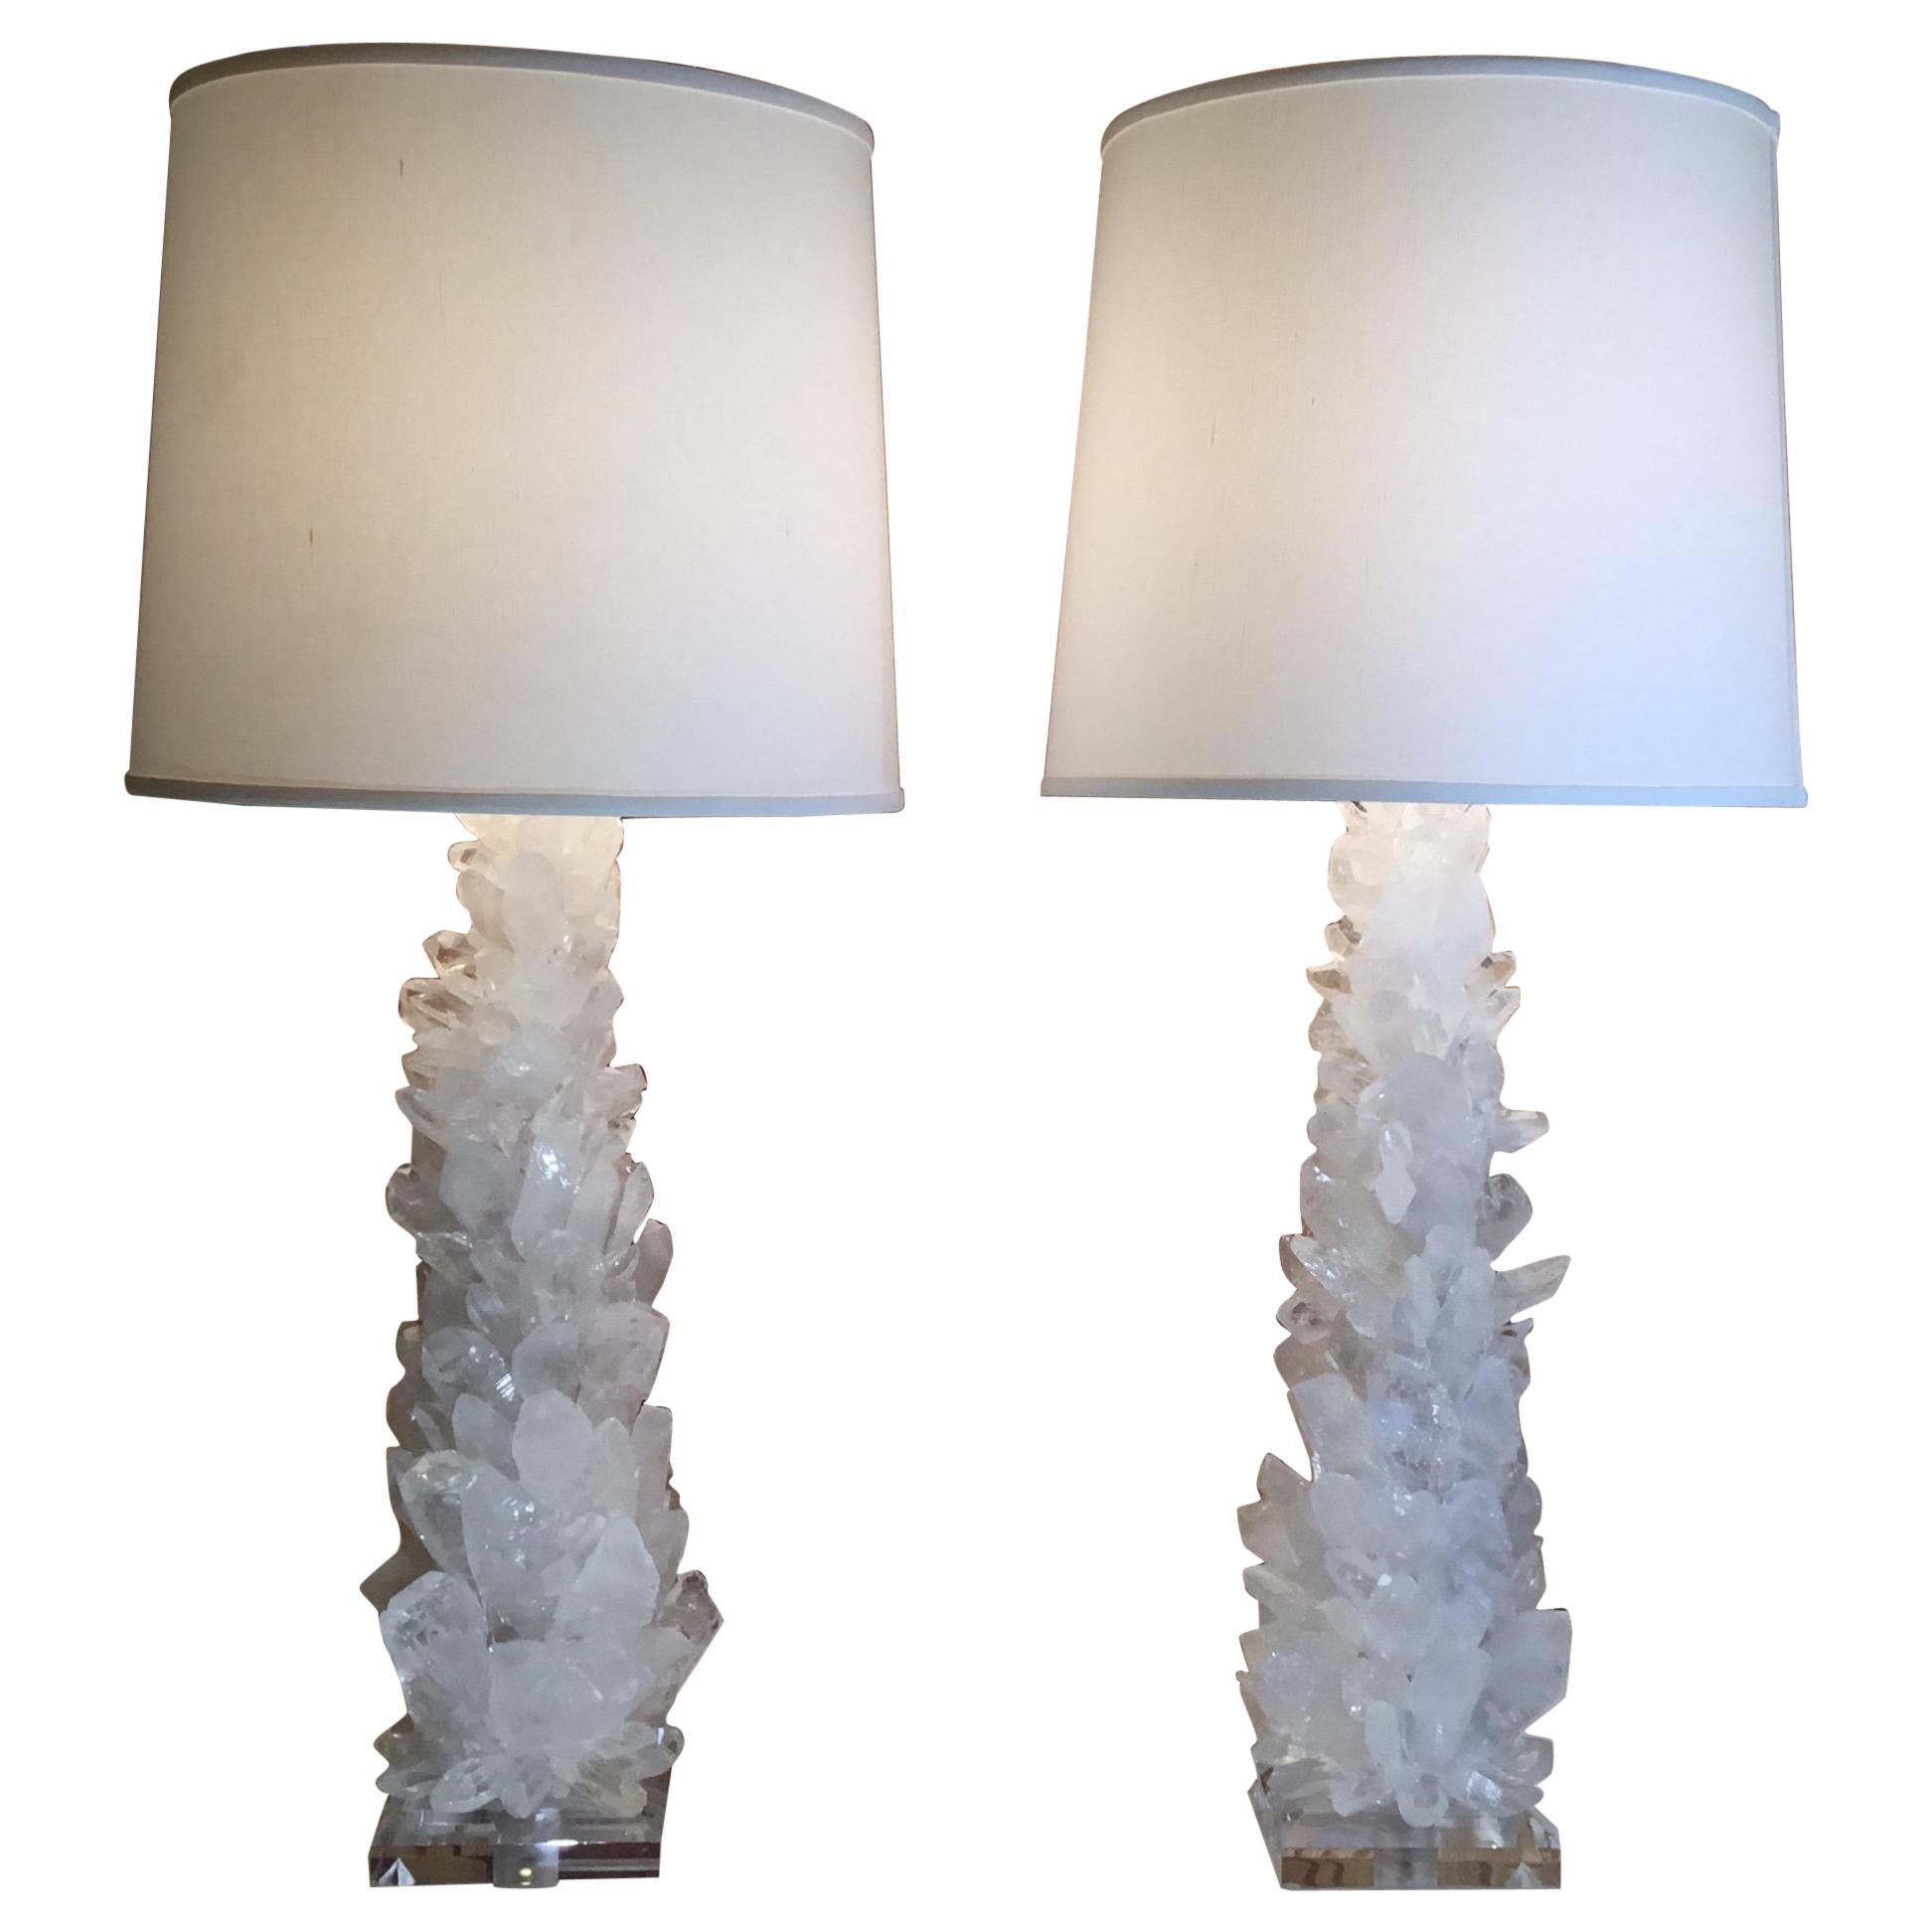 Pair of Fantastic White Quartz Crystal Table Lamps